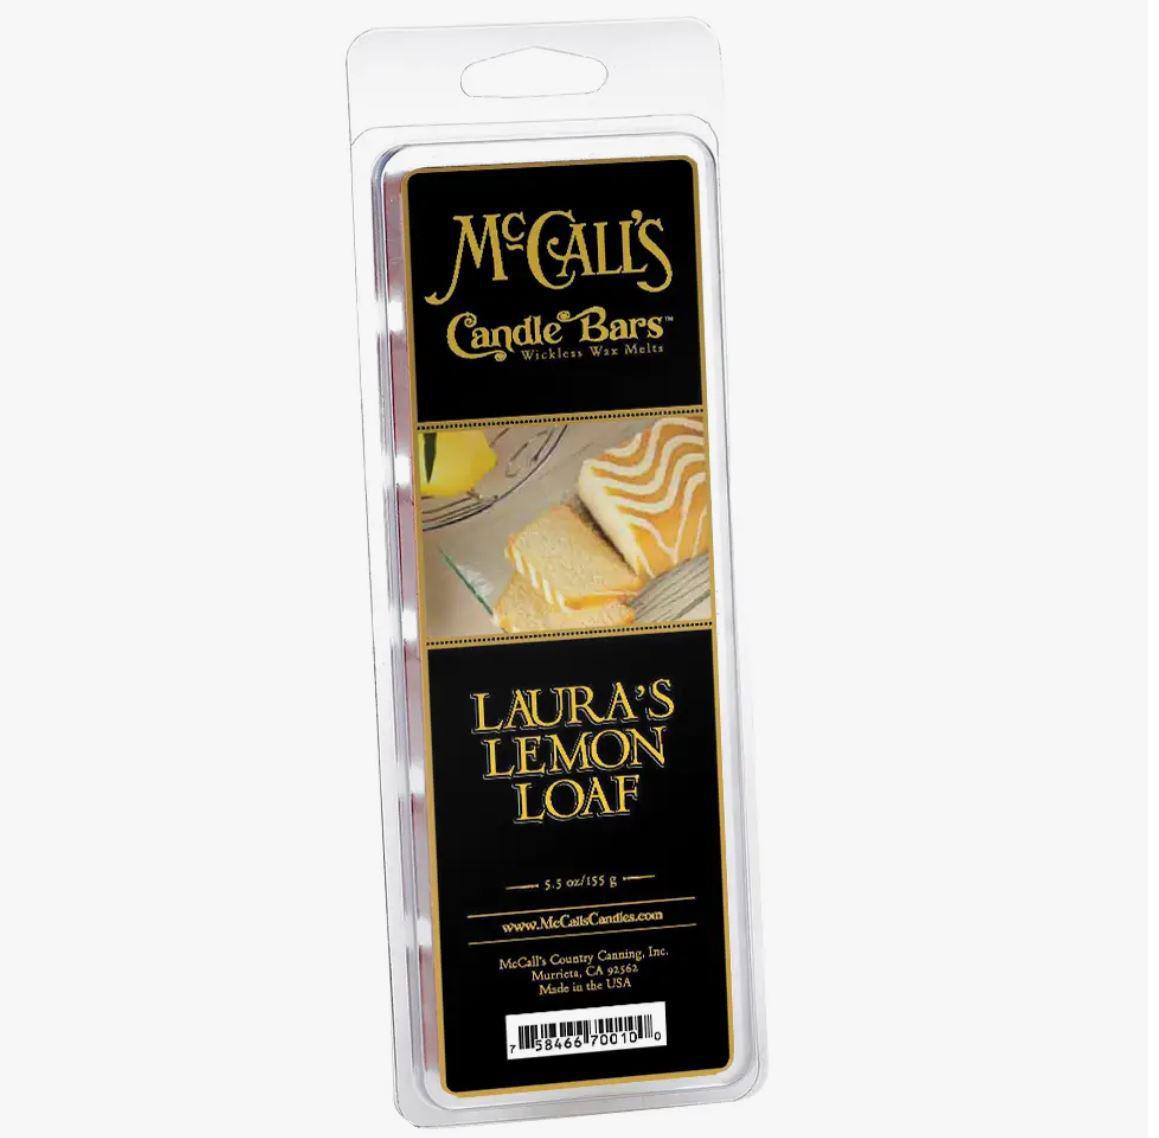 McCall's Candle Bars Wax Melts | Laura's Lemon Loaf